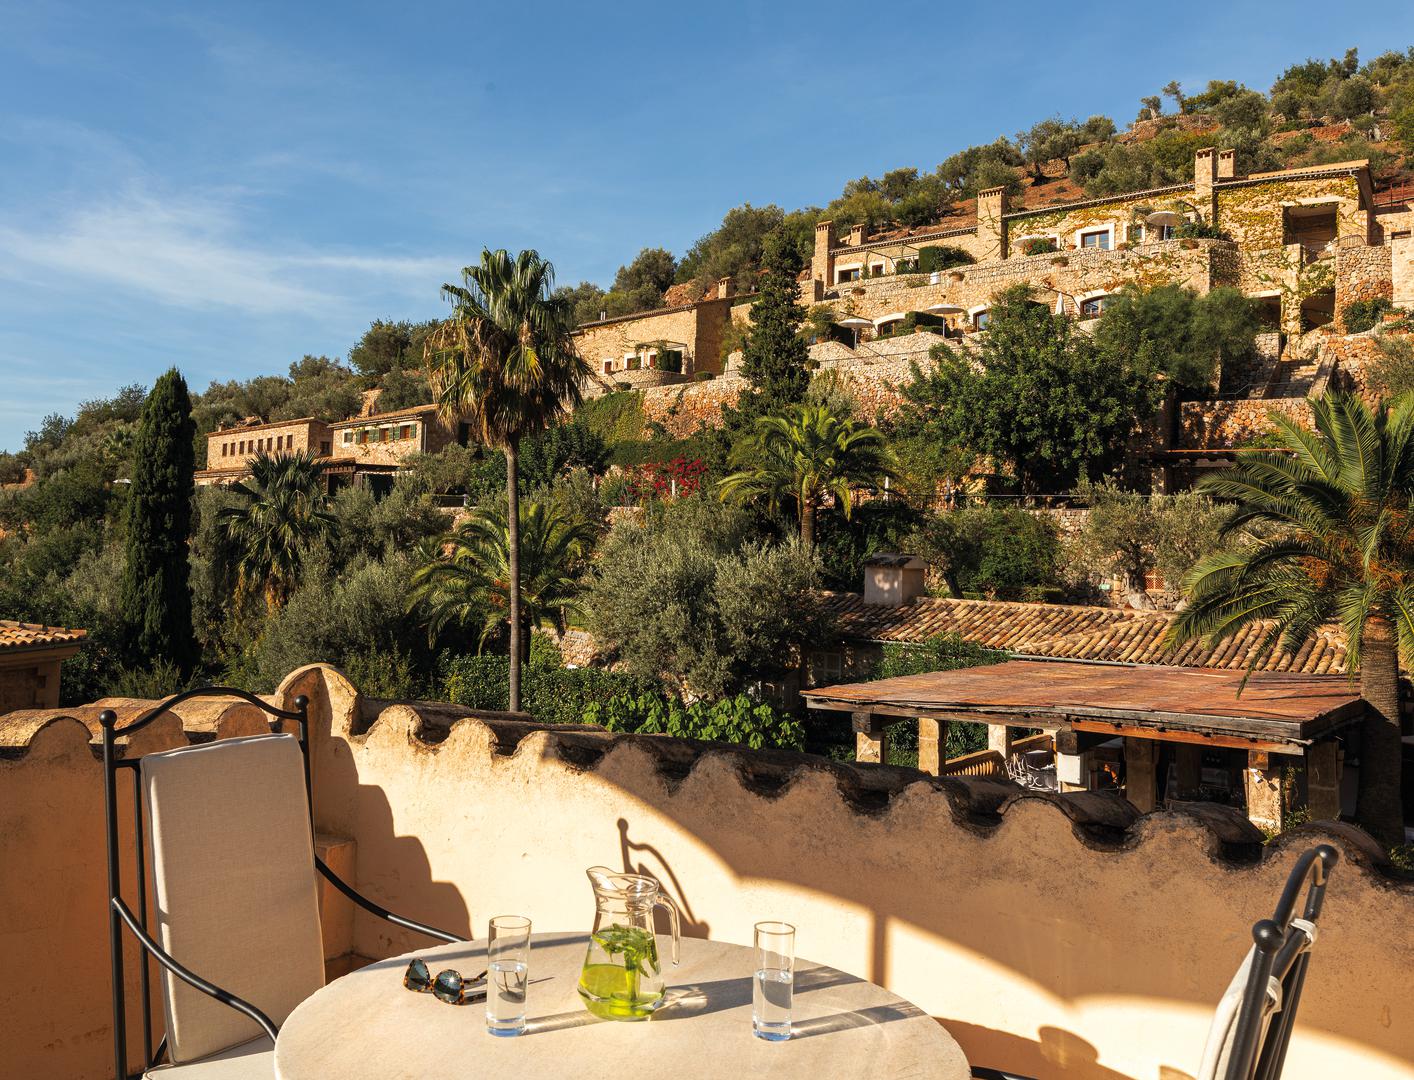 Images La Residencia, A Belmond Hotel, Mallorca